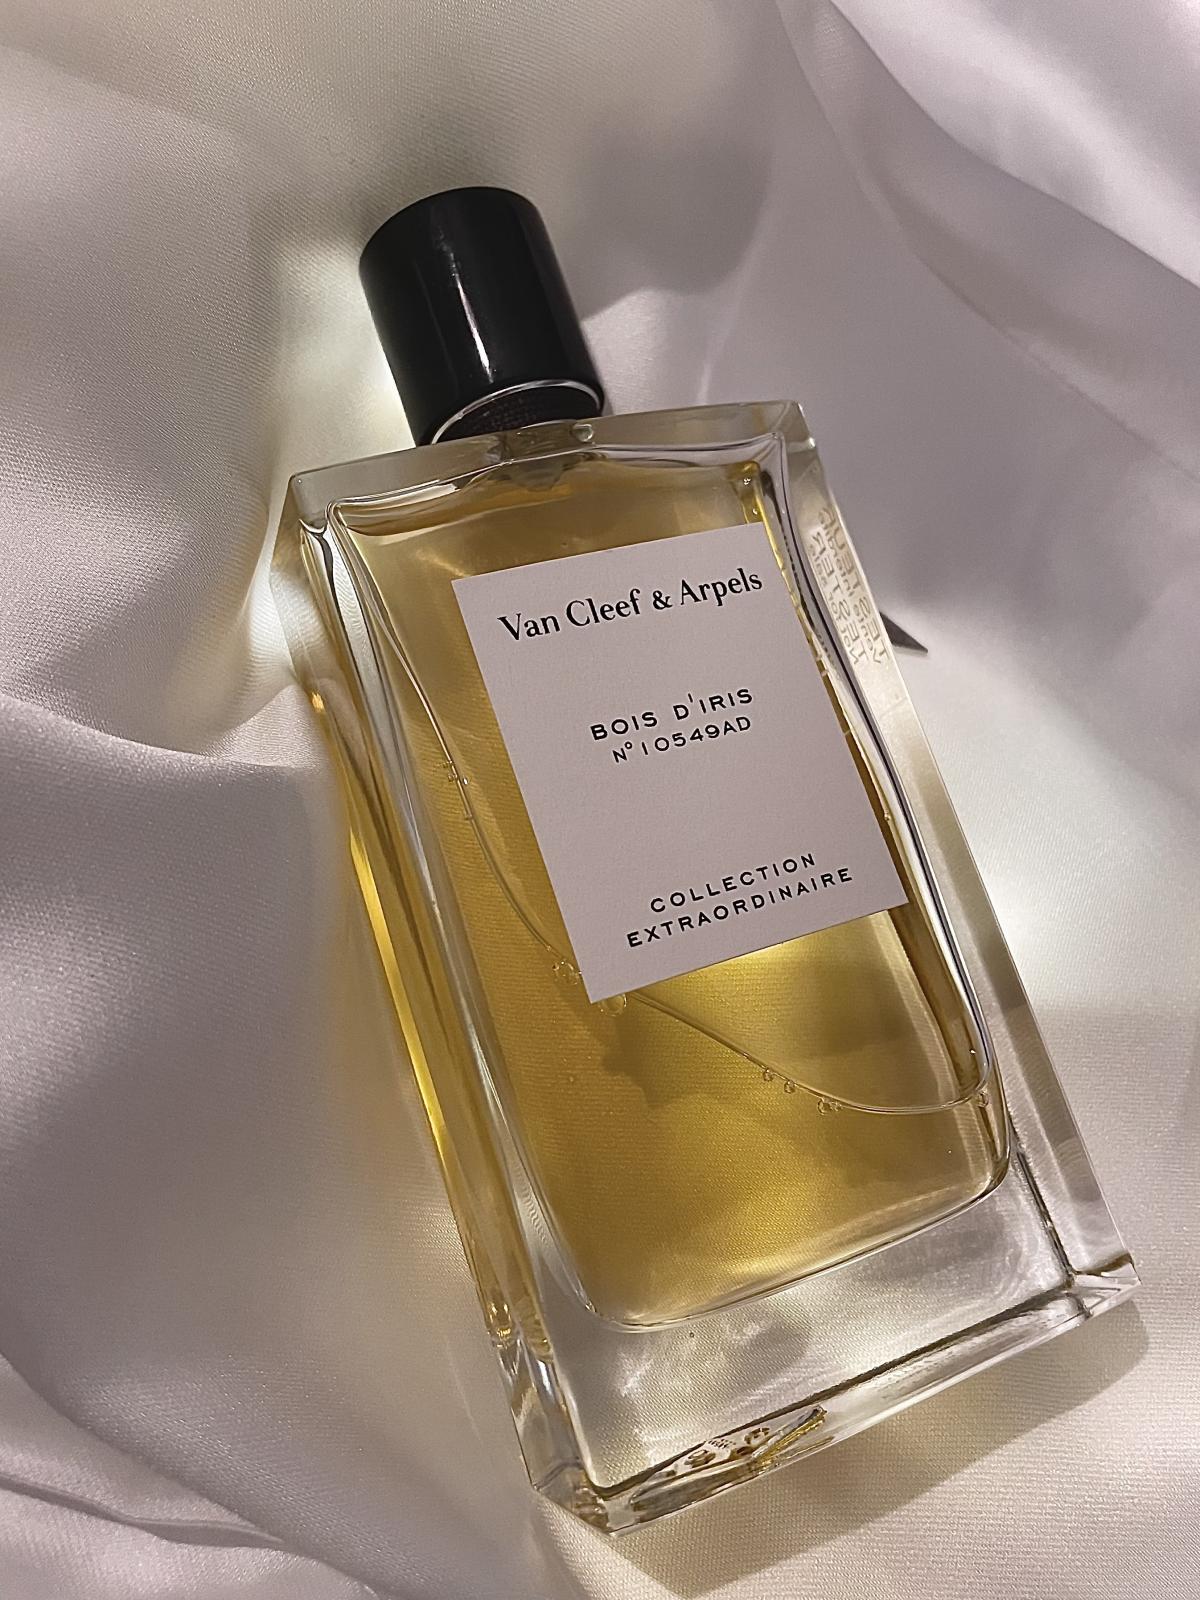 Bois d'Iris Van Cleef & Arpels perfume - a fragrance for women 2009